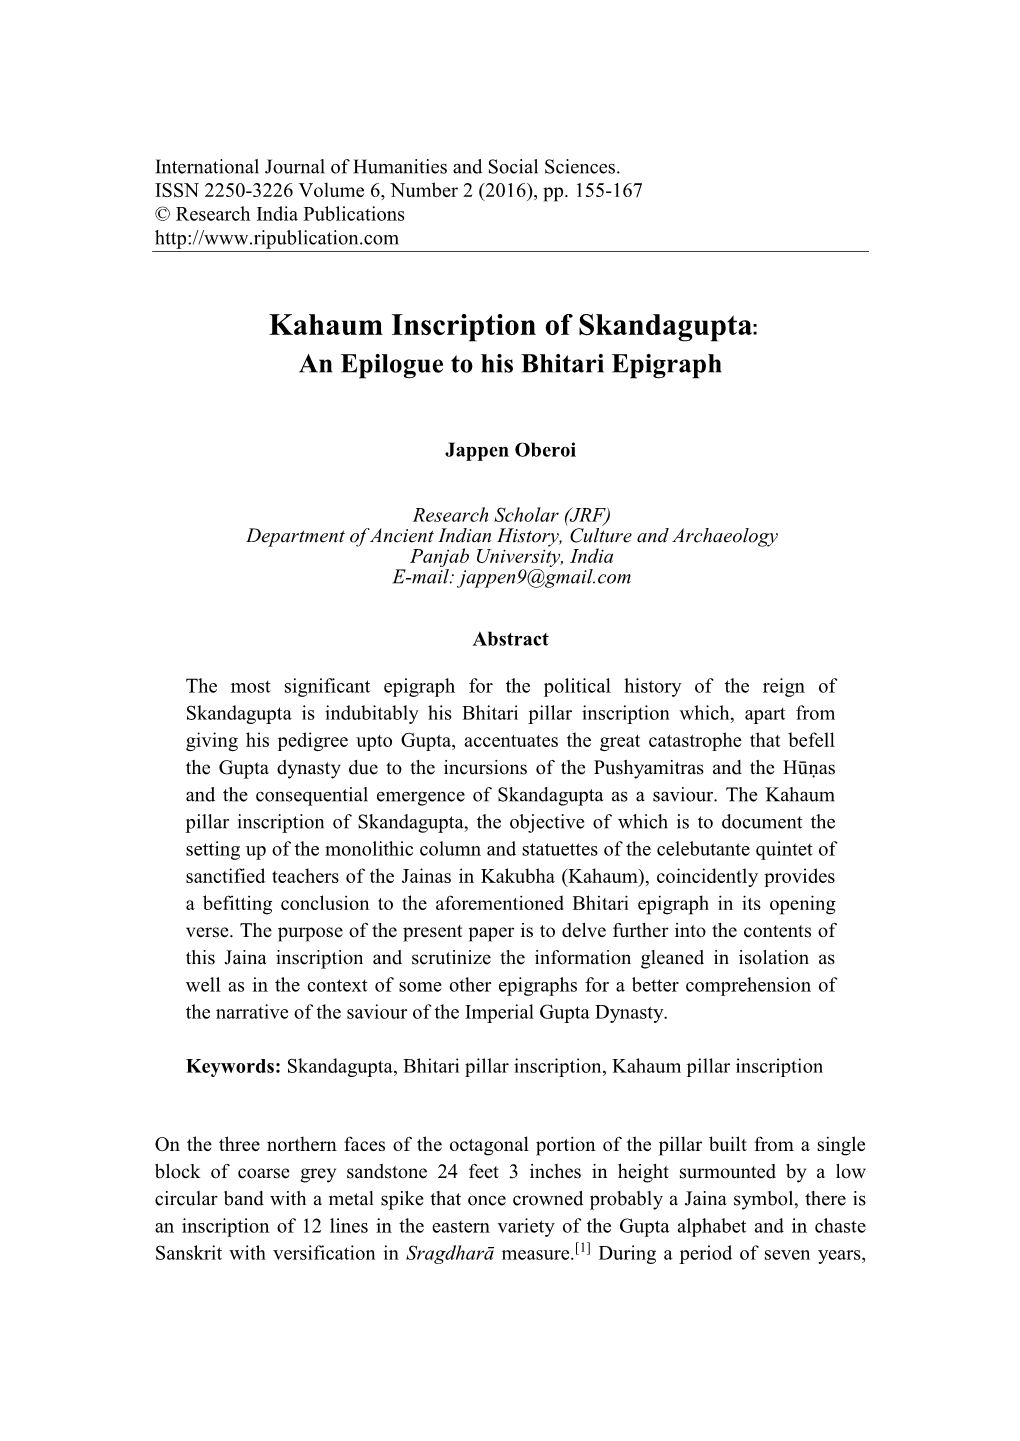 Kahaum Inscription of Skandagupta: an Epilogue to His Bhitari Epigraph